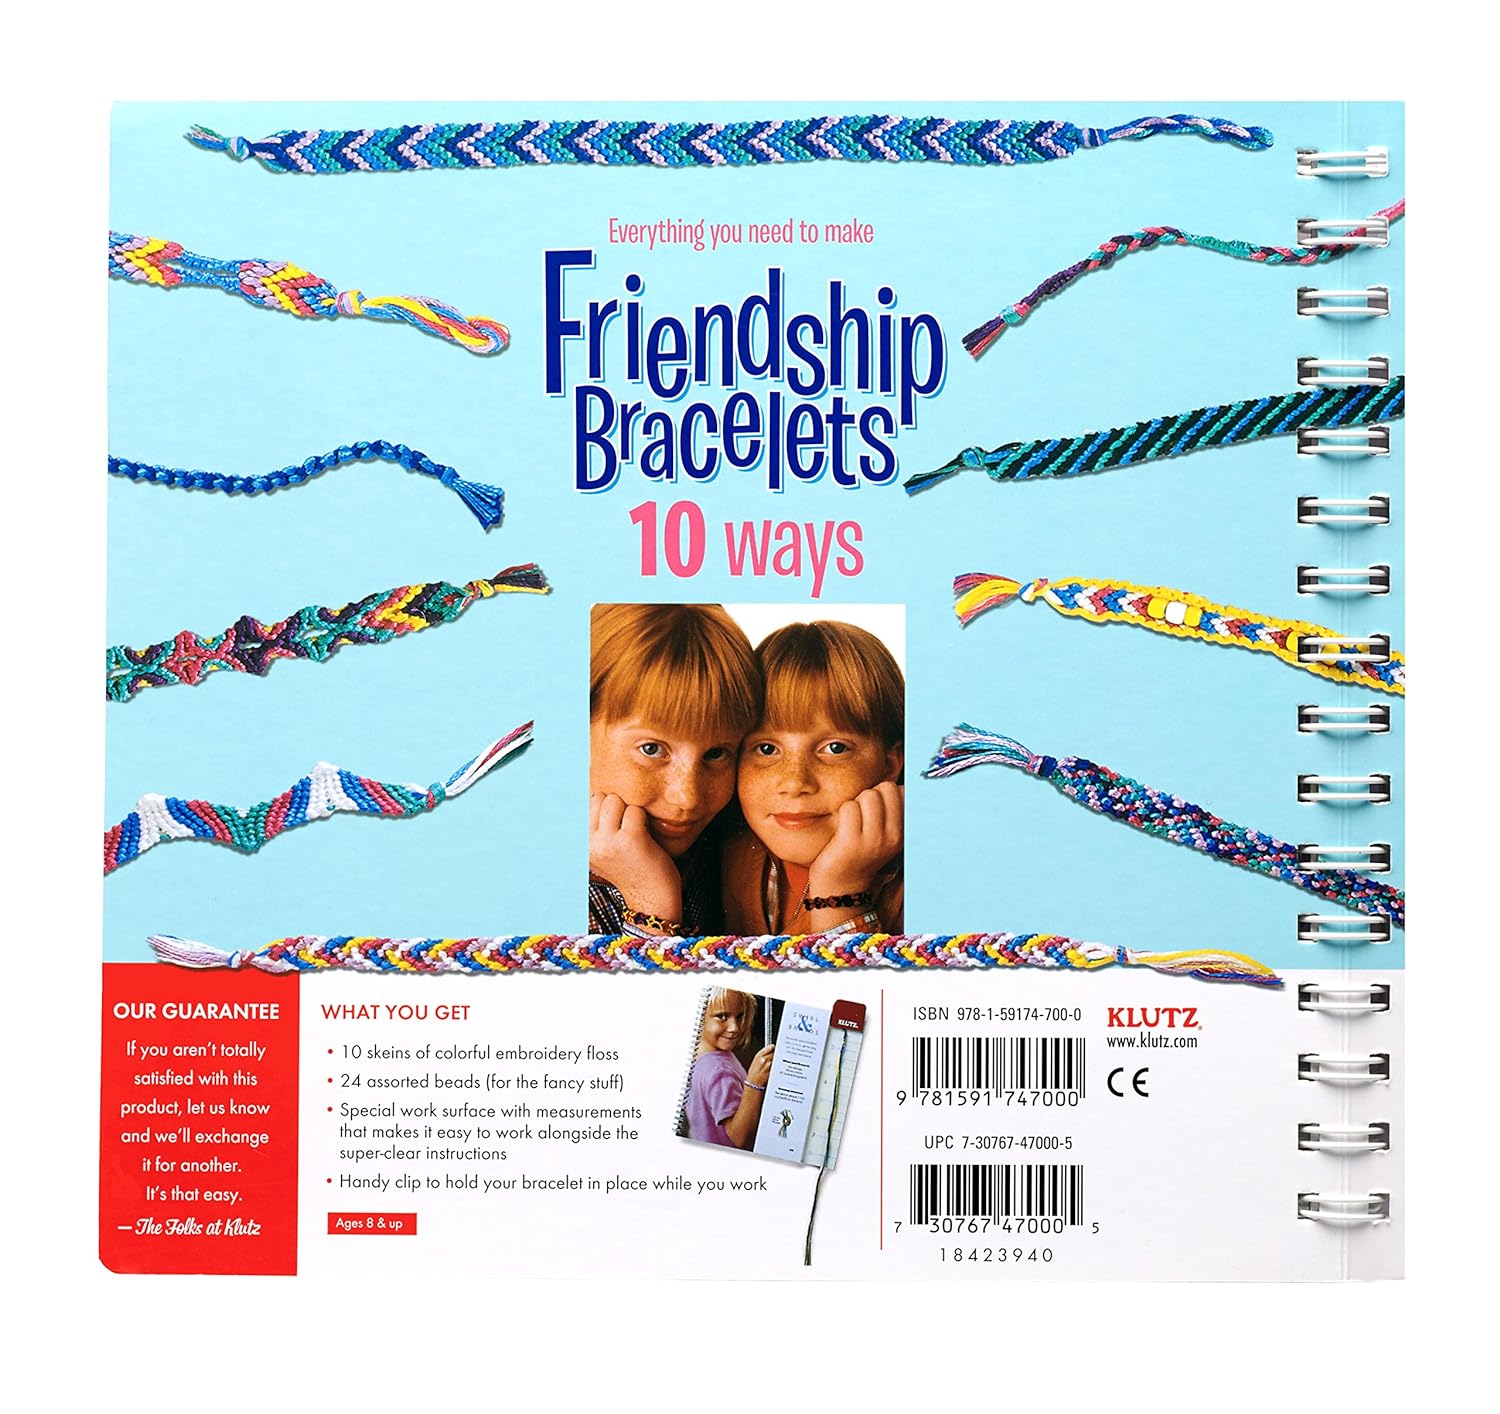 Klutz- Friendship Bracelets